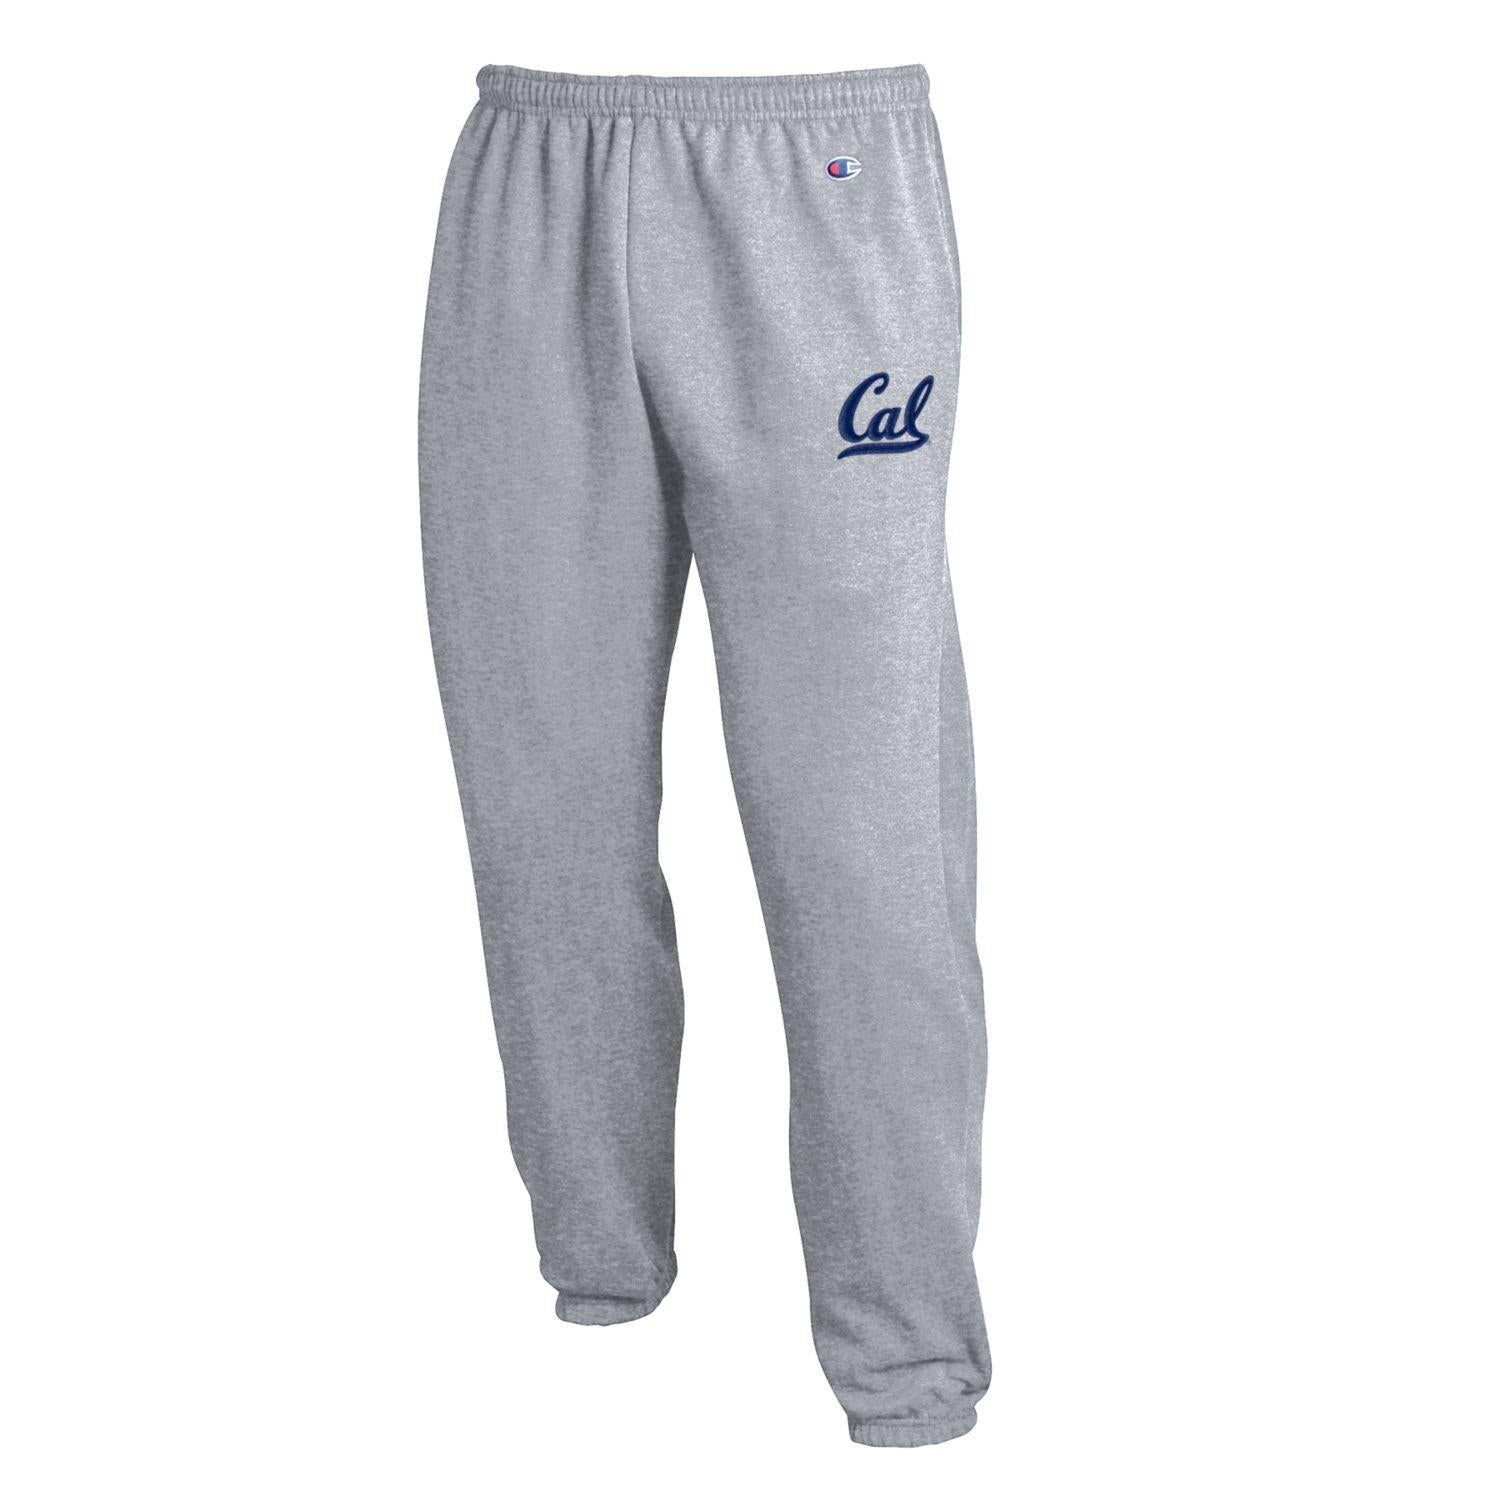 U.C. Cal embroidered Champion men's sweatpants-Grey – Shop College Wear